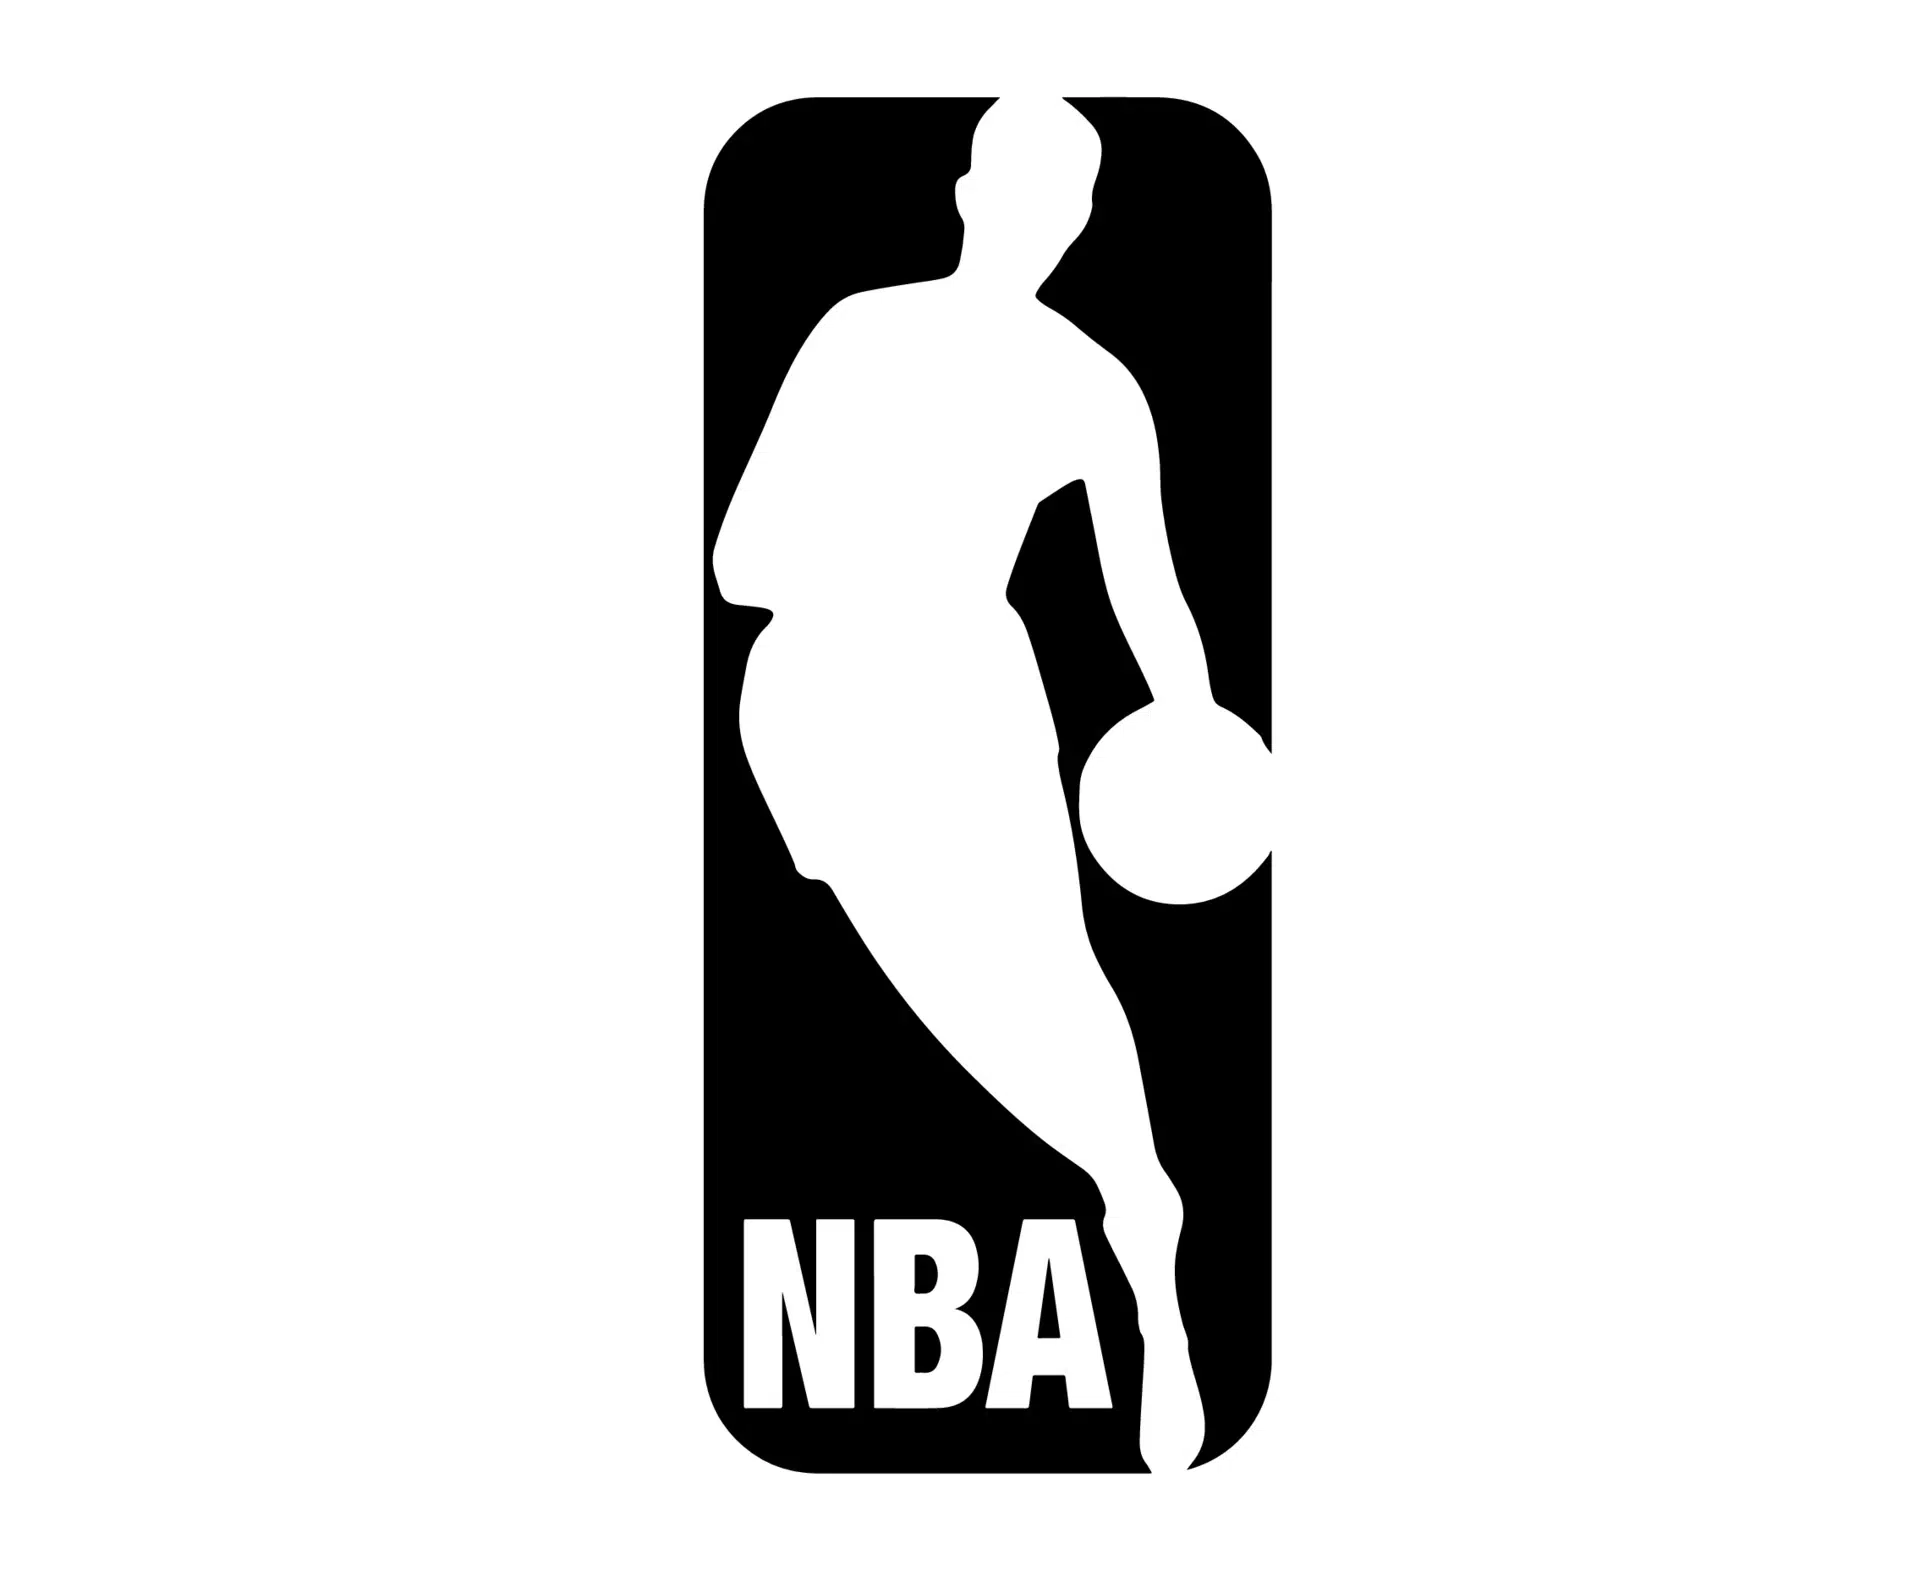 vecteezy nba logo symbol white and black design america basketball 10994469